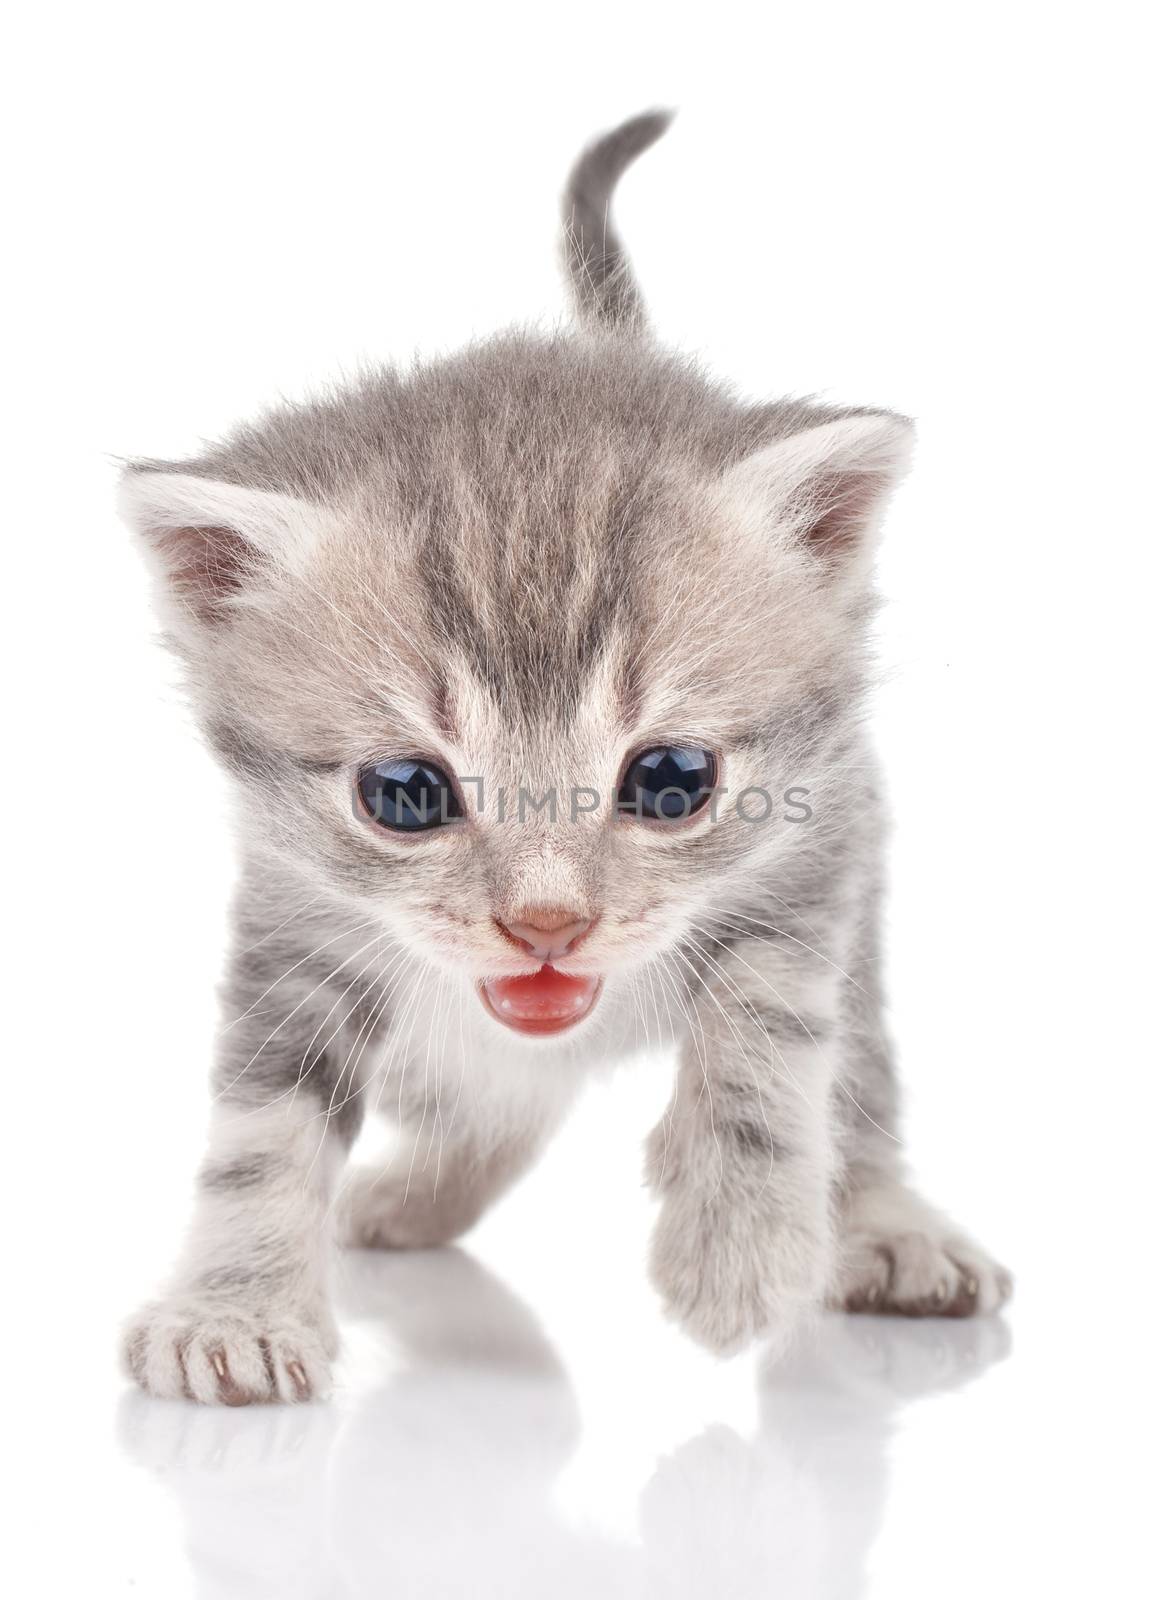  kitten  by serkucher